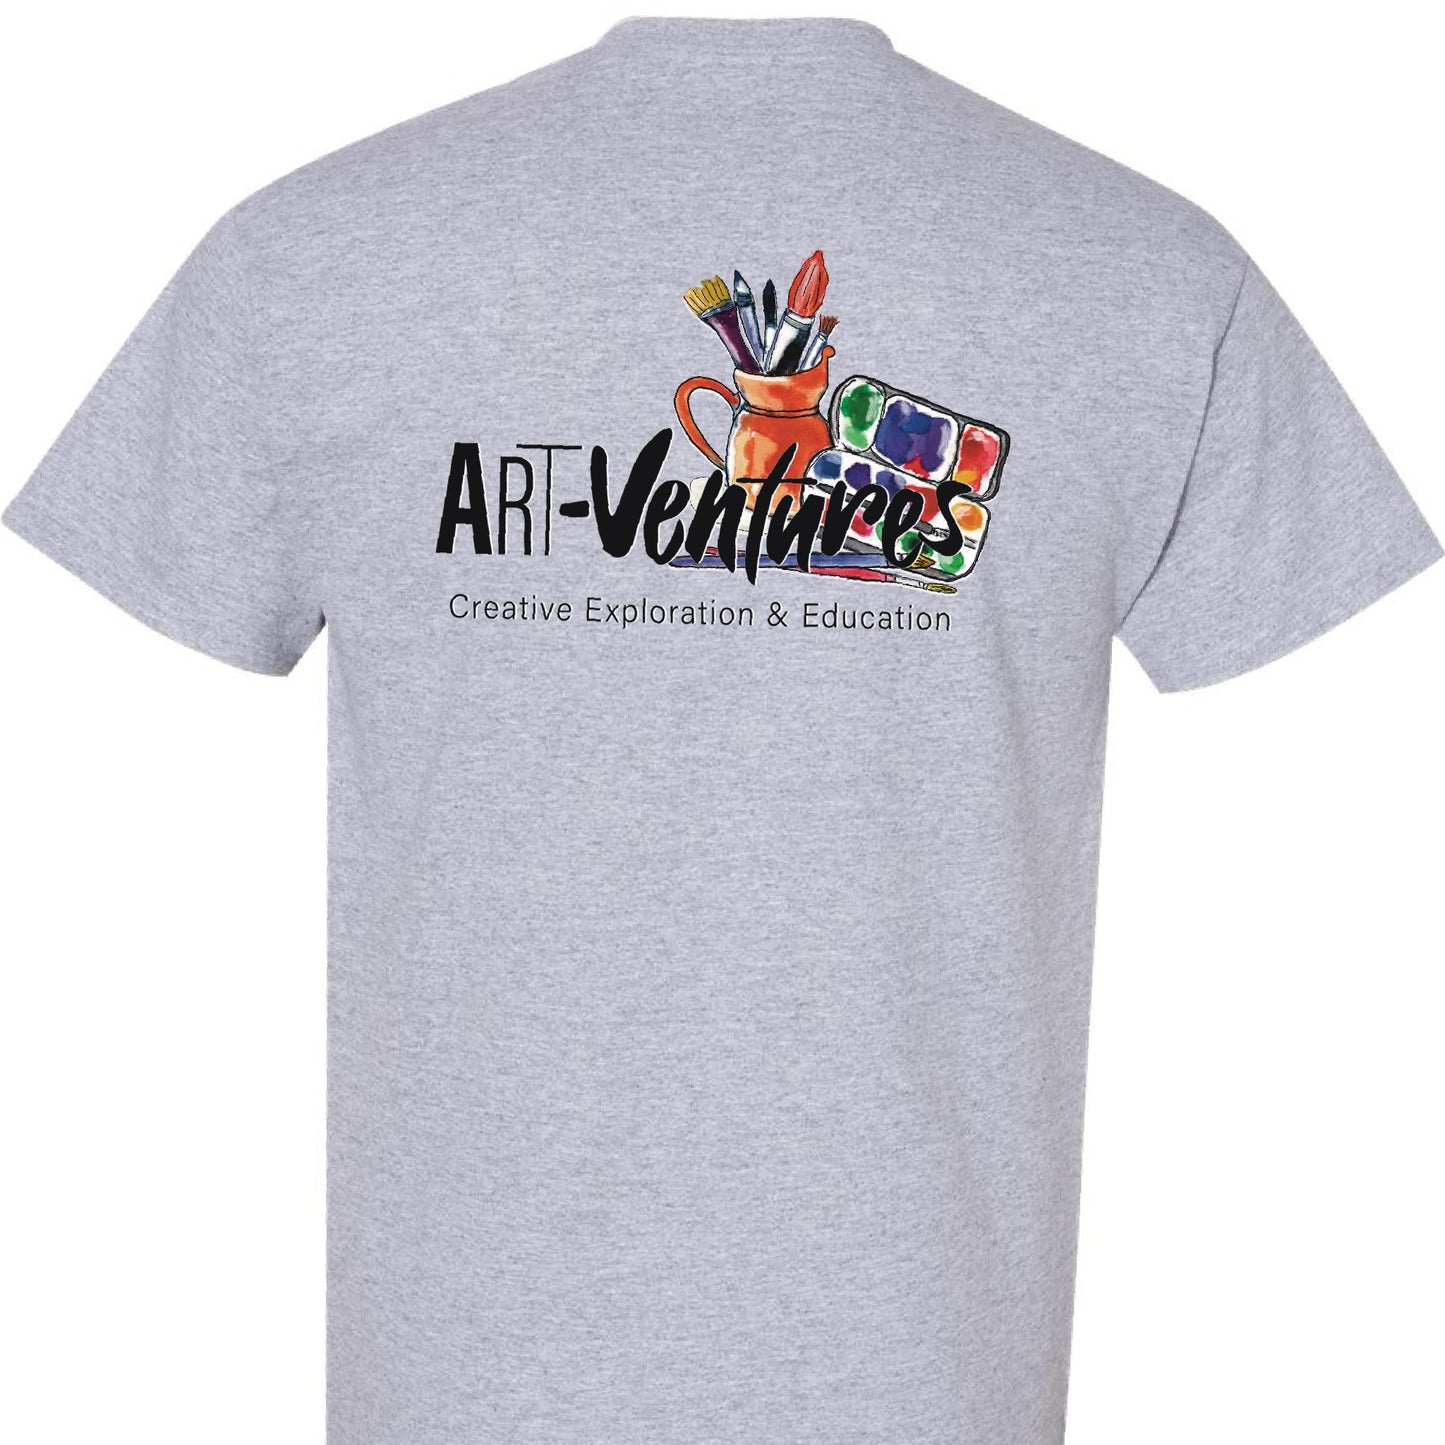 Art Ventures Graphic T-shirt Paint & Brushes